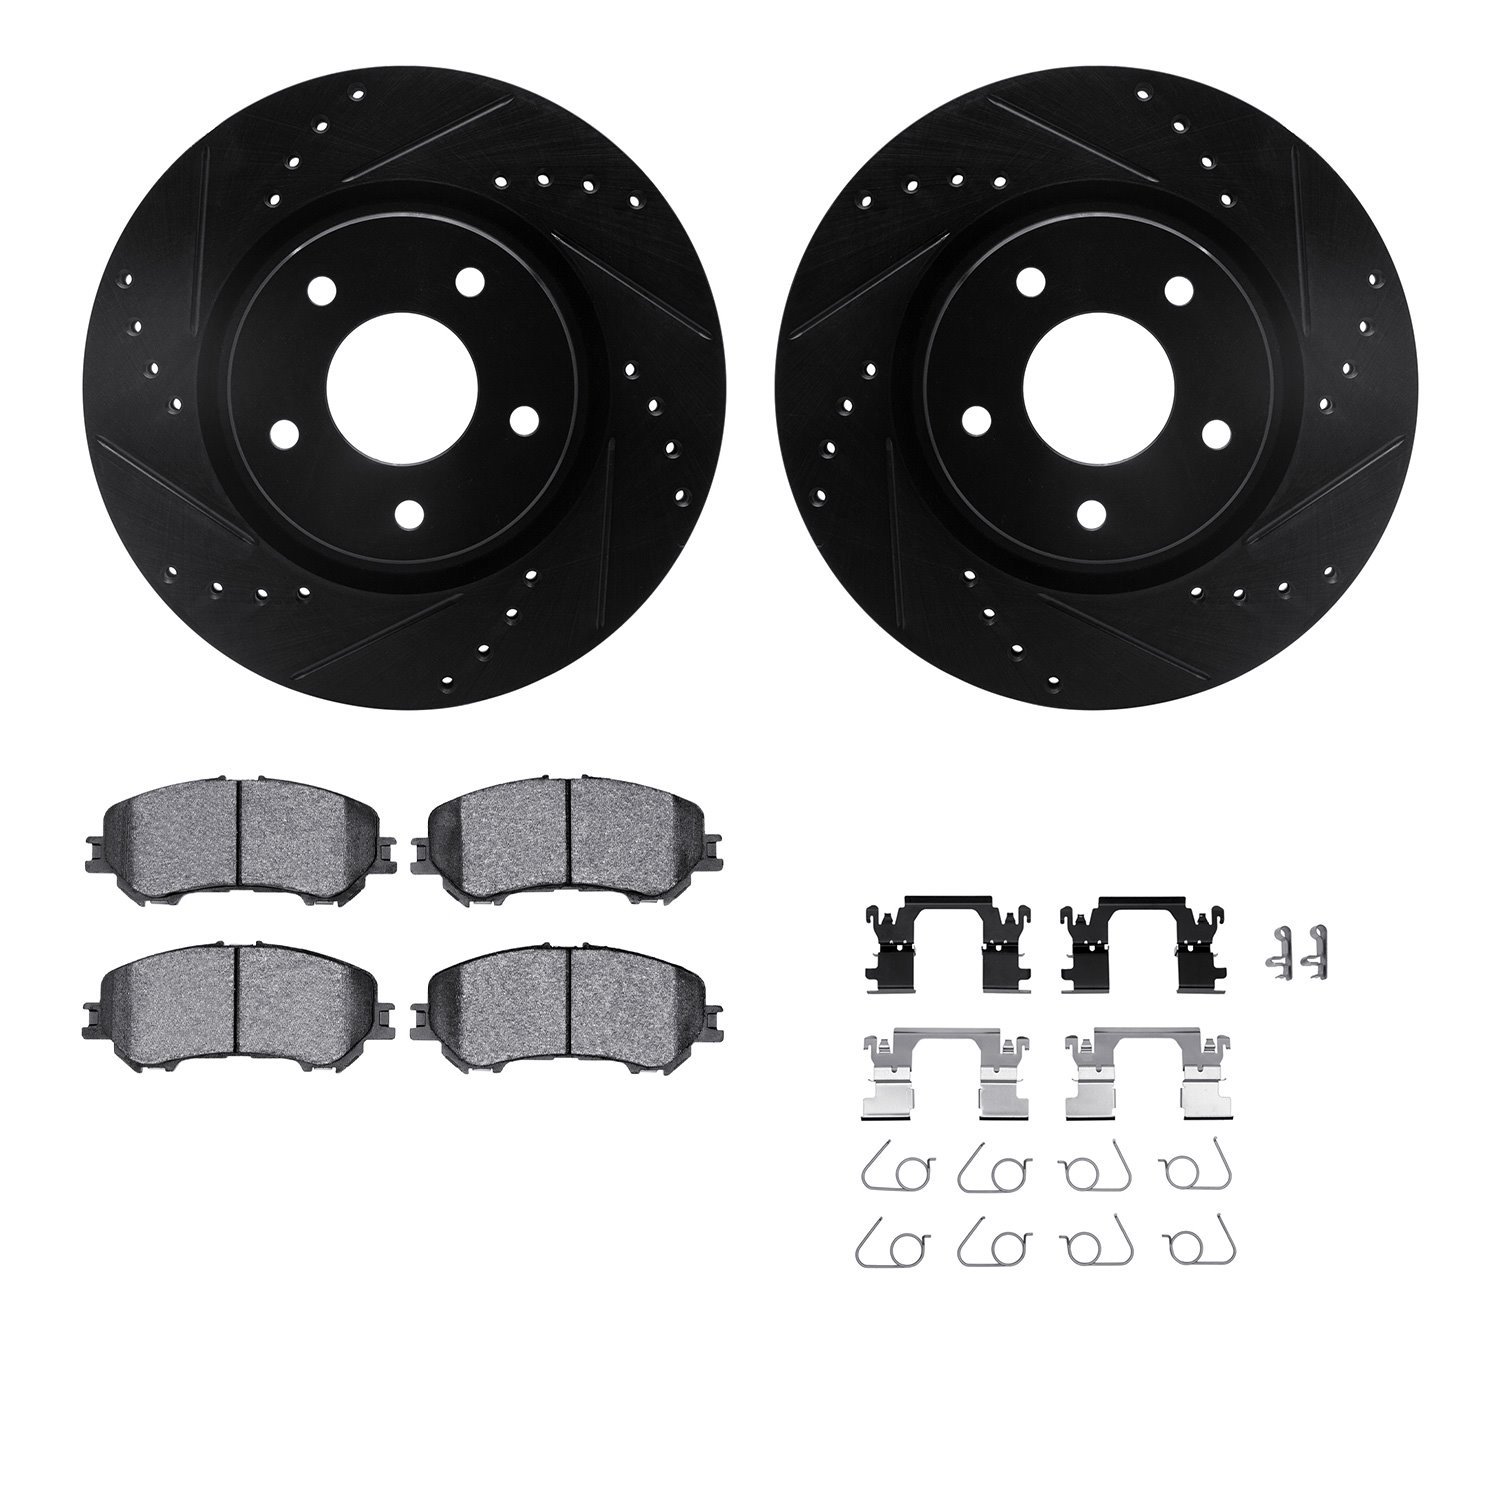 8312-67130 Drilled/Slotted Brake Rotors with 3000-Series Ceramic Brake Pads Kit & Hardware [Black], Fits Select Multiple Makes/M